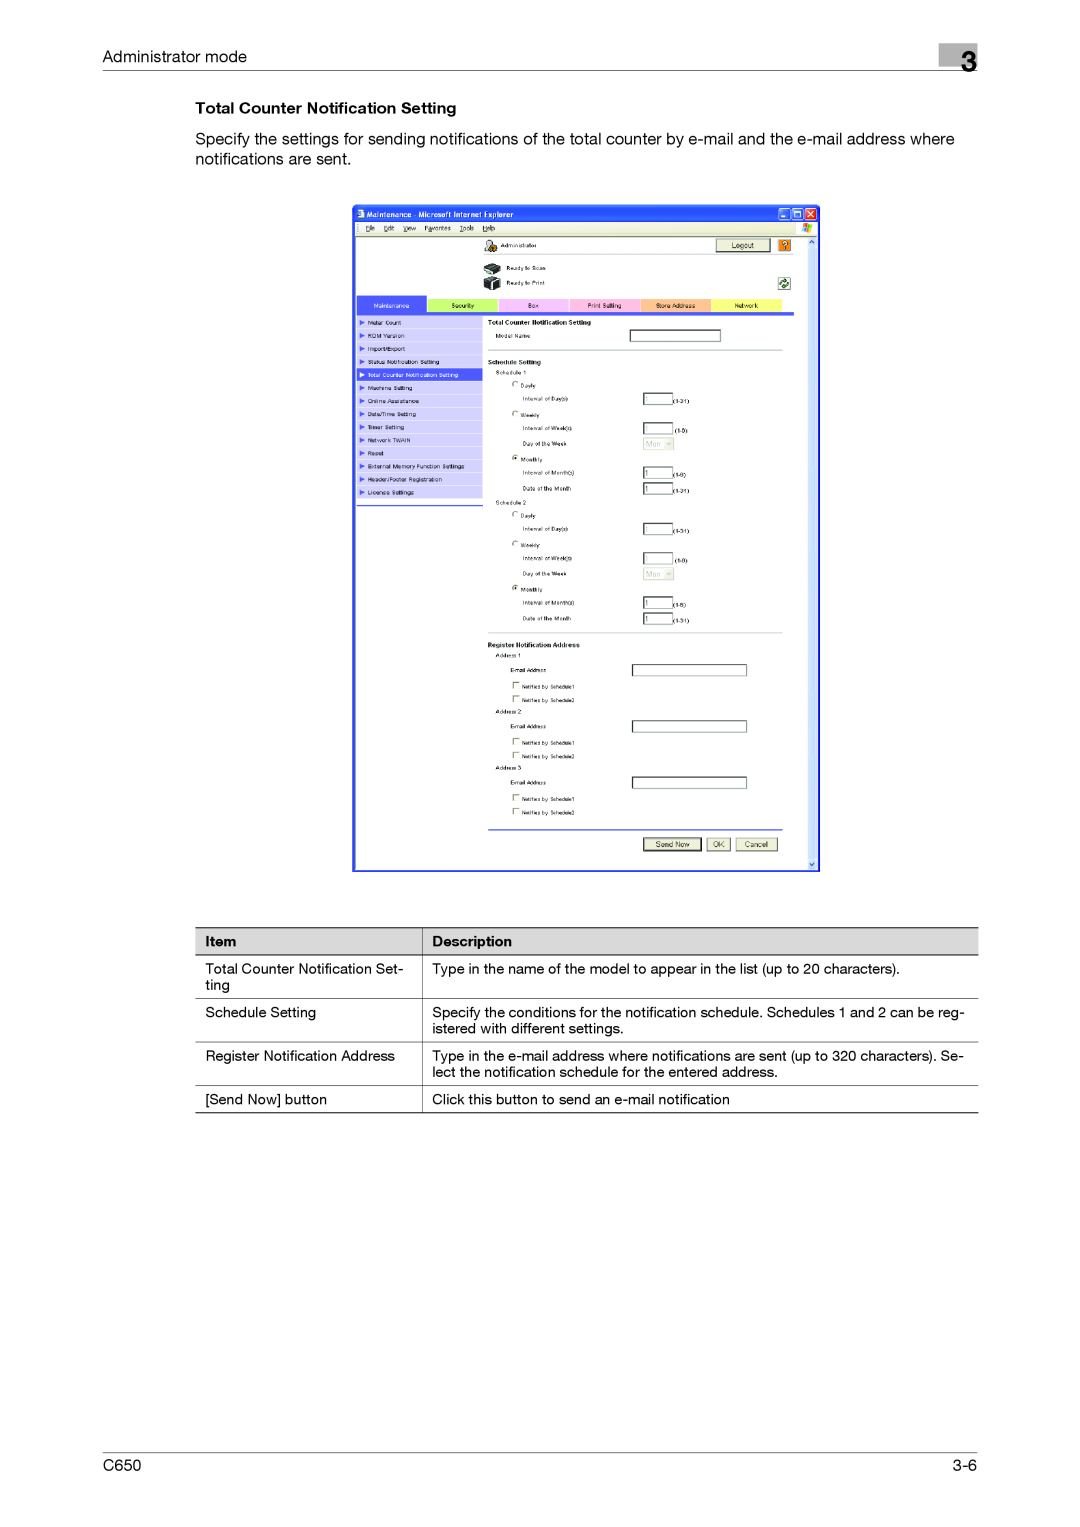 Konica Minolta C650 manual Administrator mode, Total Counter Notification Setting 